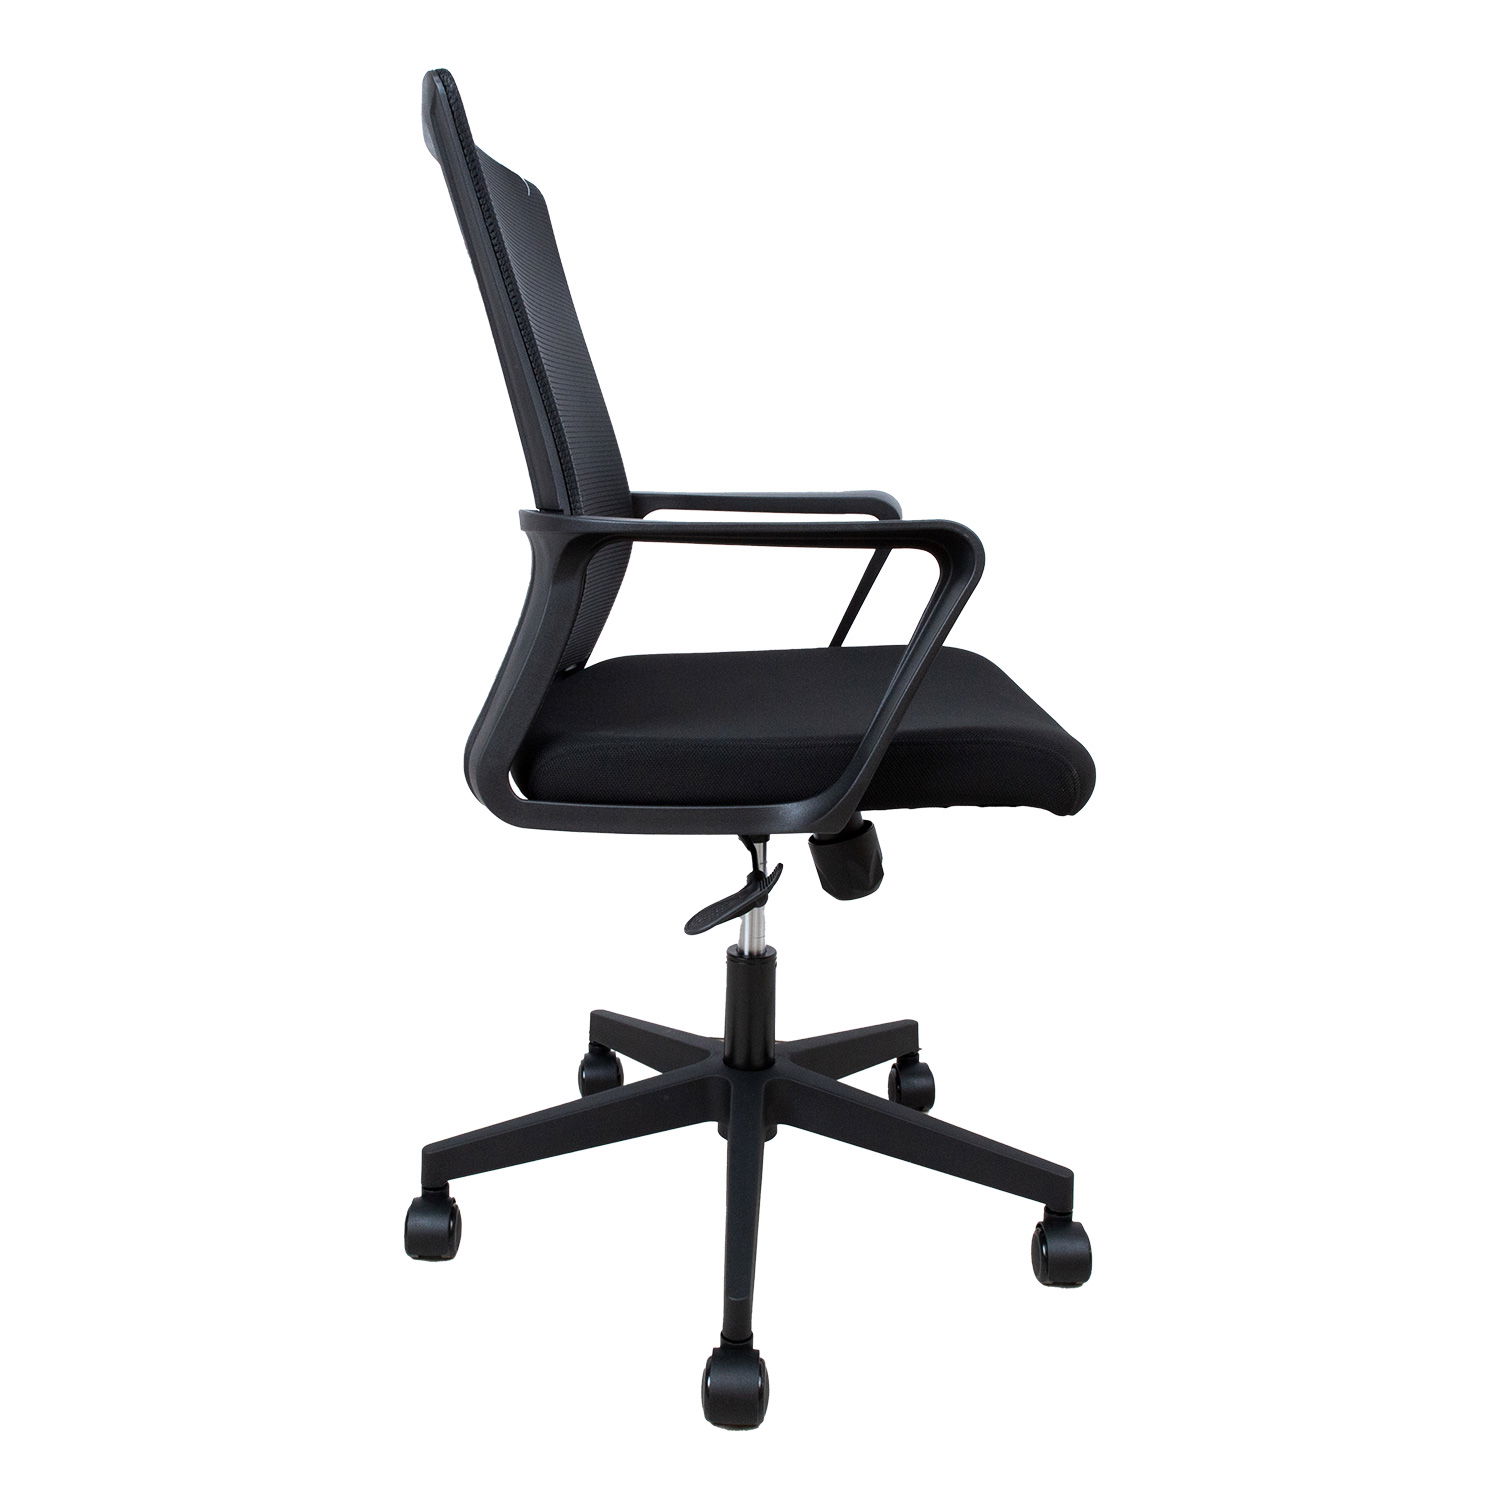 Biuro kėdė EMMA, 57x65x98-104 cm, juoda - 3